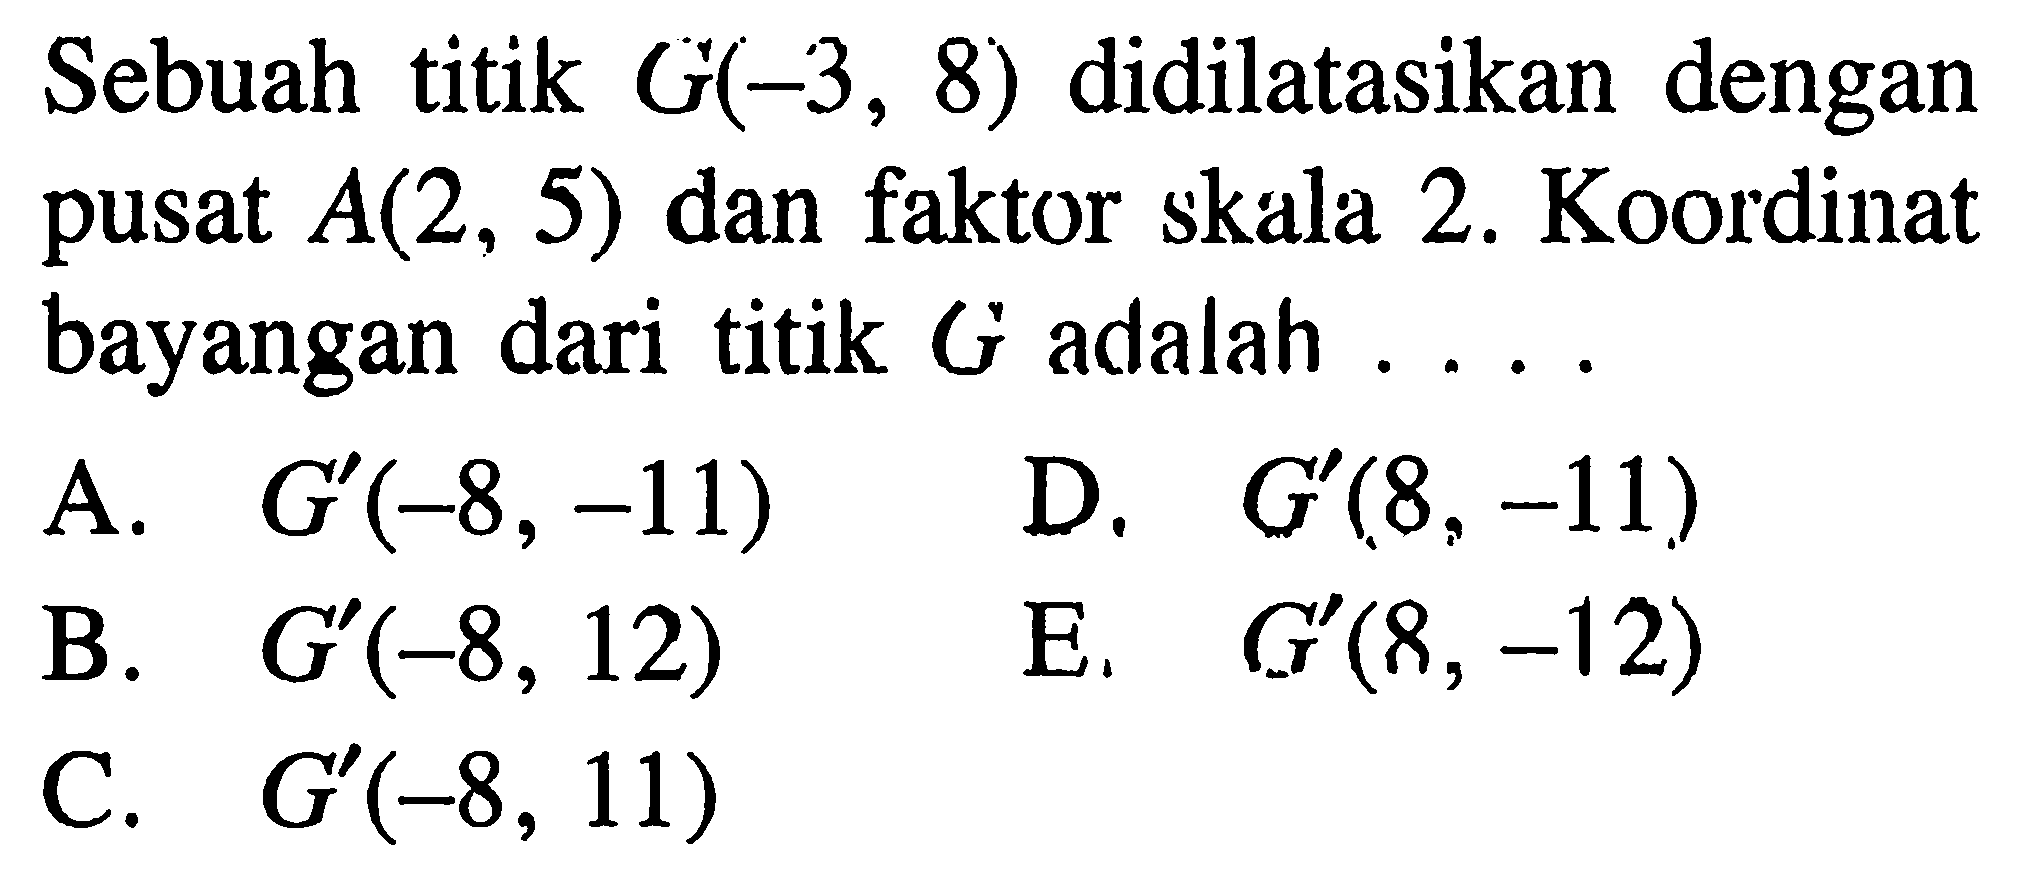 Sebuah titik G(-3, 8) didilatasikan dengan pusat A(2, 5) dan faktor skala 2. Koordinat bayangan dari titik G adalah ..